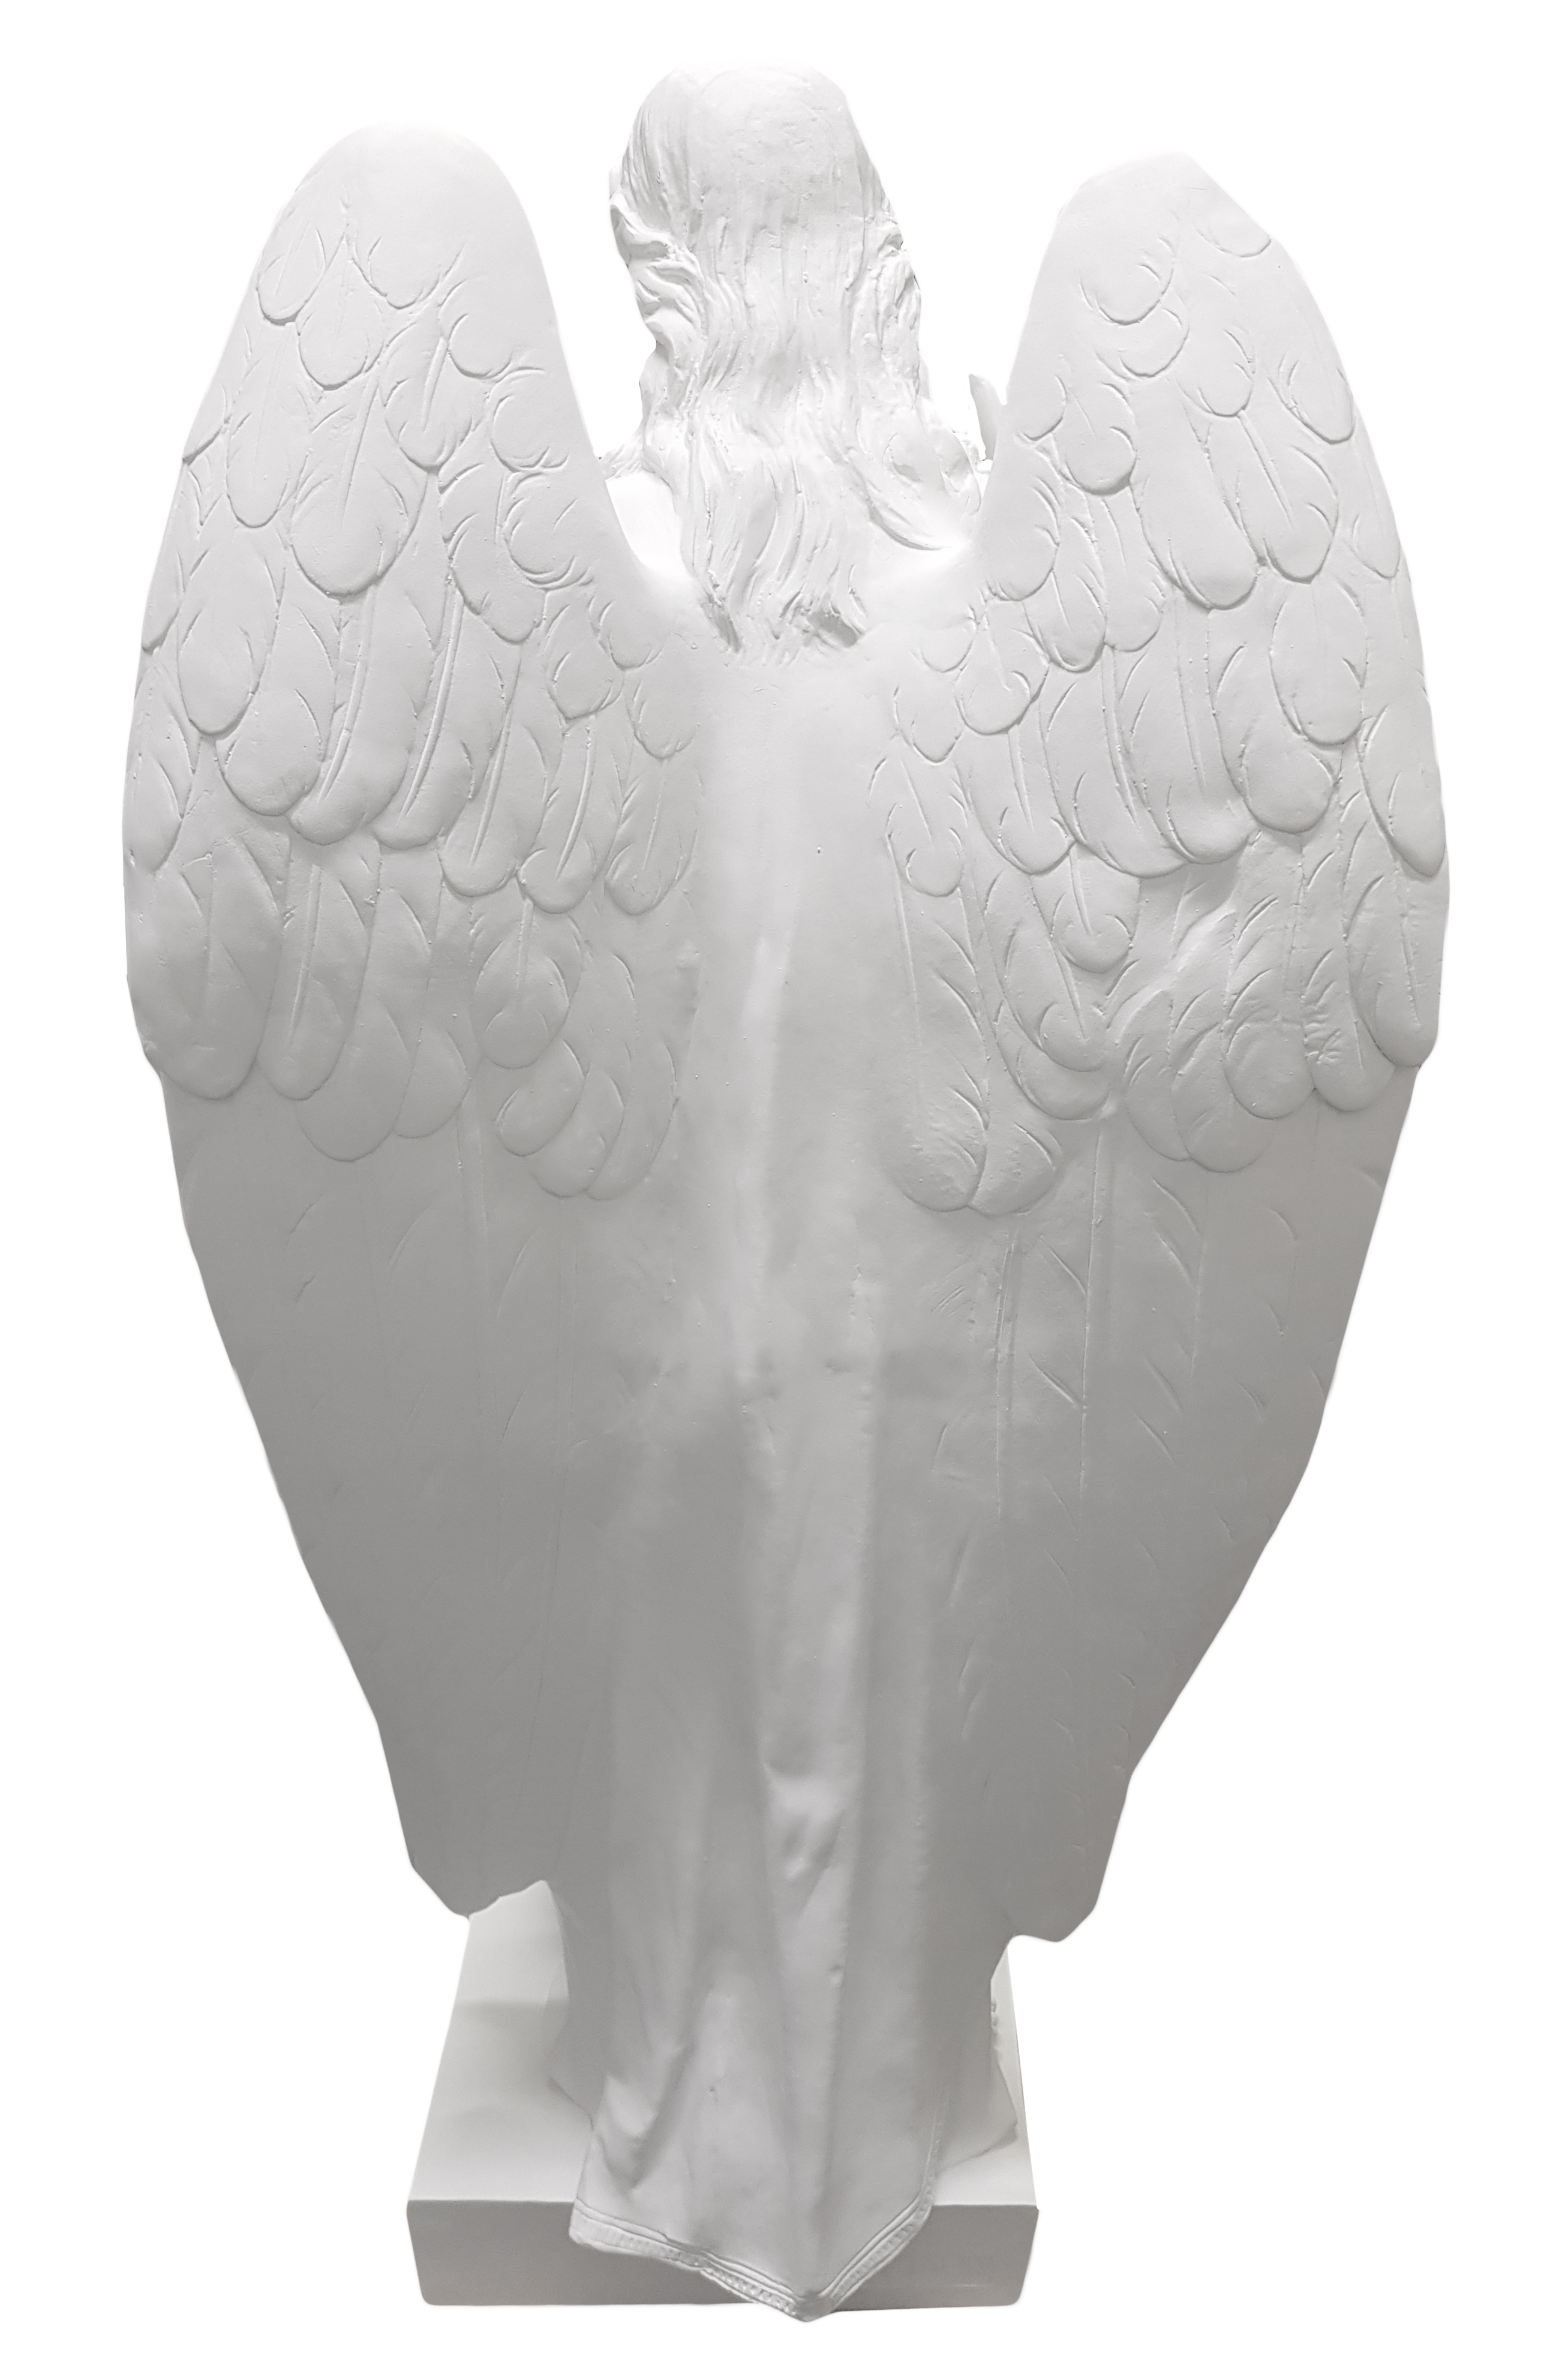 Anioł z dzieckiem - Figura nagrobna - 100 cm - R 142